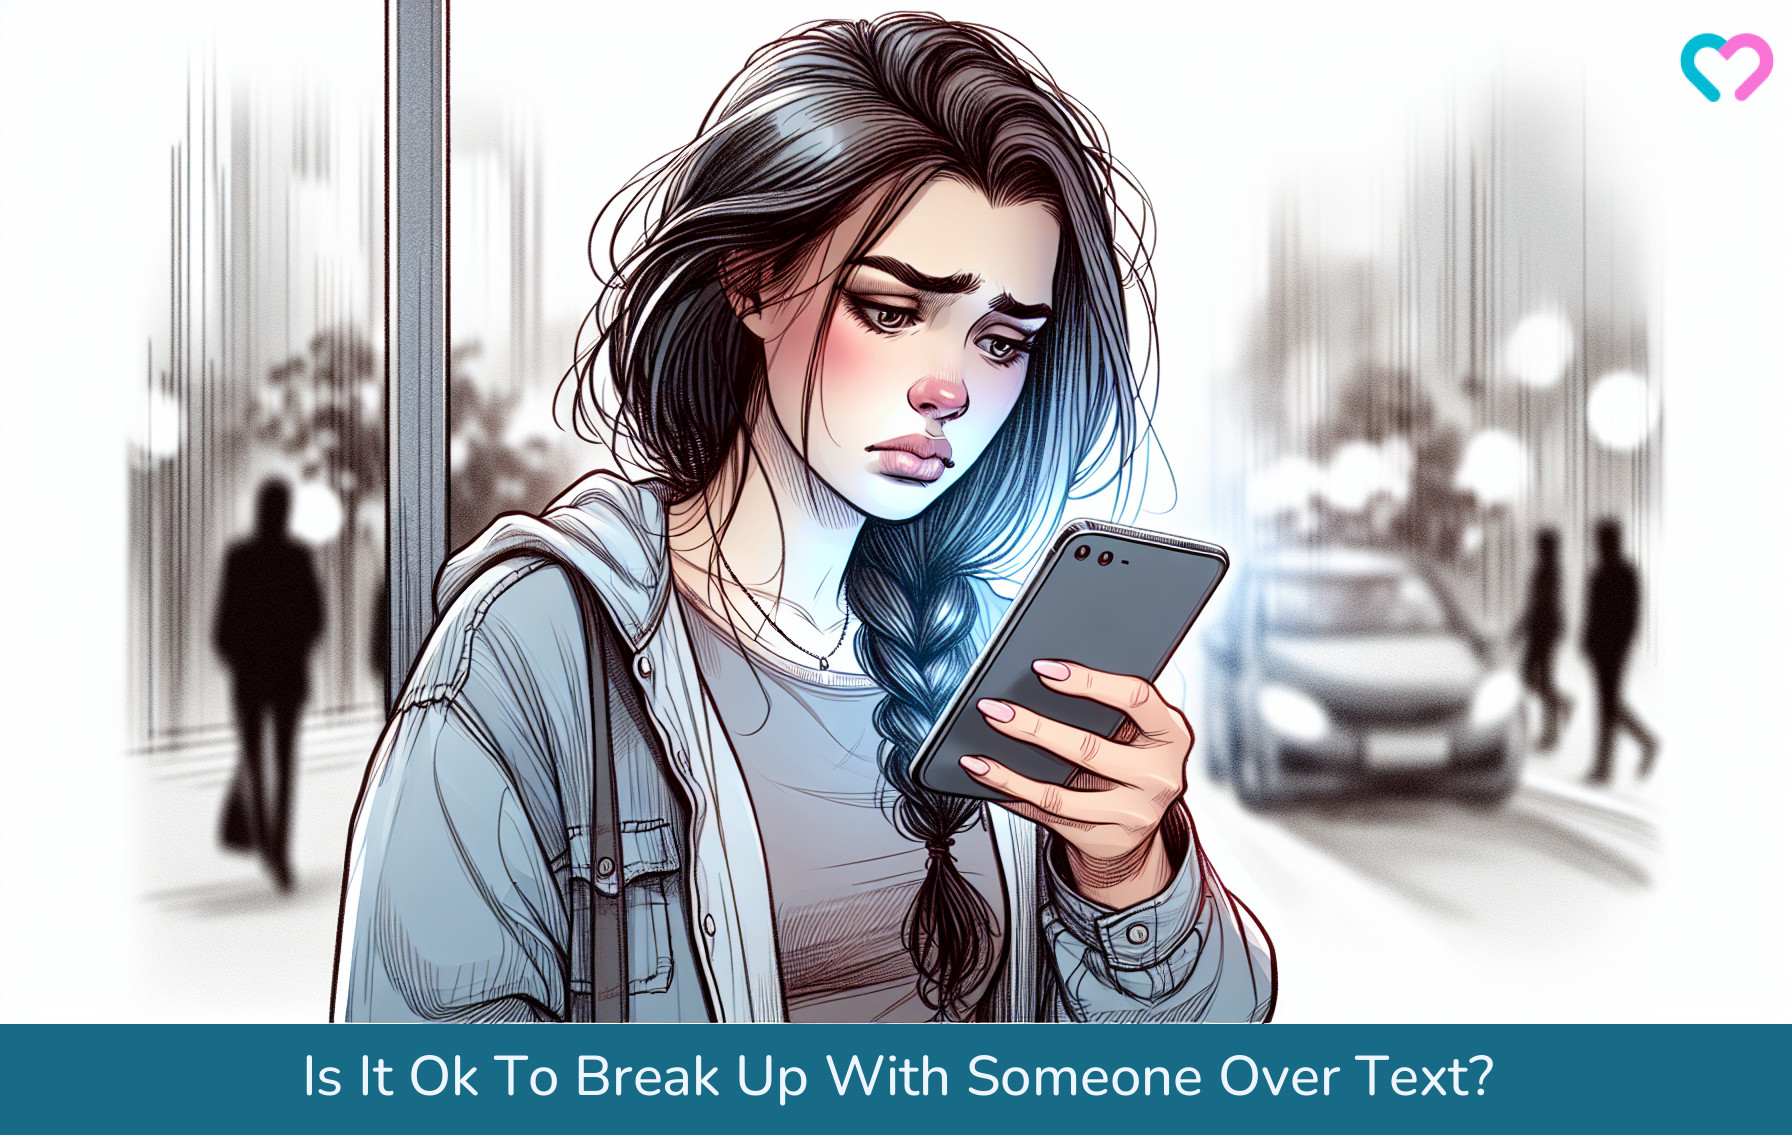 break up over text_illustration